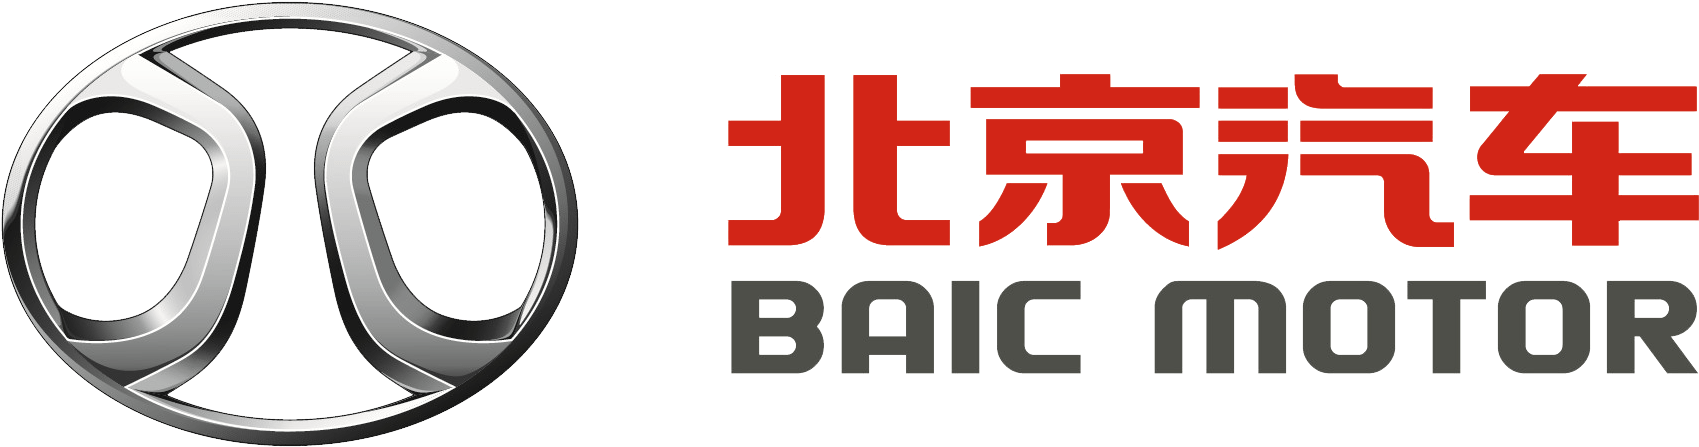 Baic Logo - Download Aston Martin Logo Vector PNG Image with No